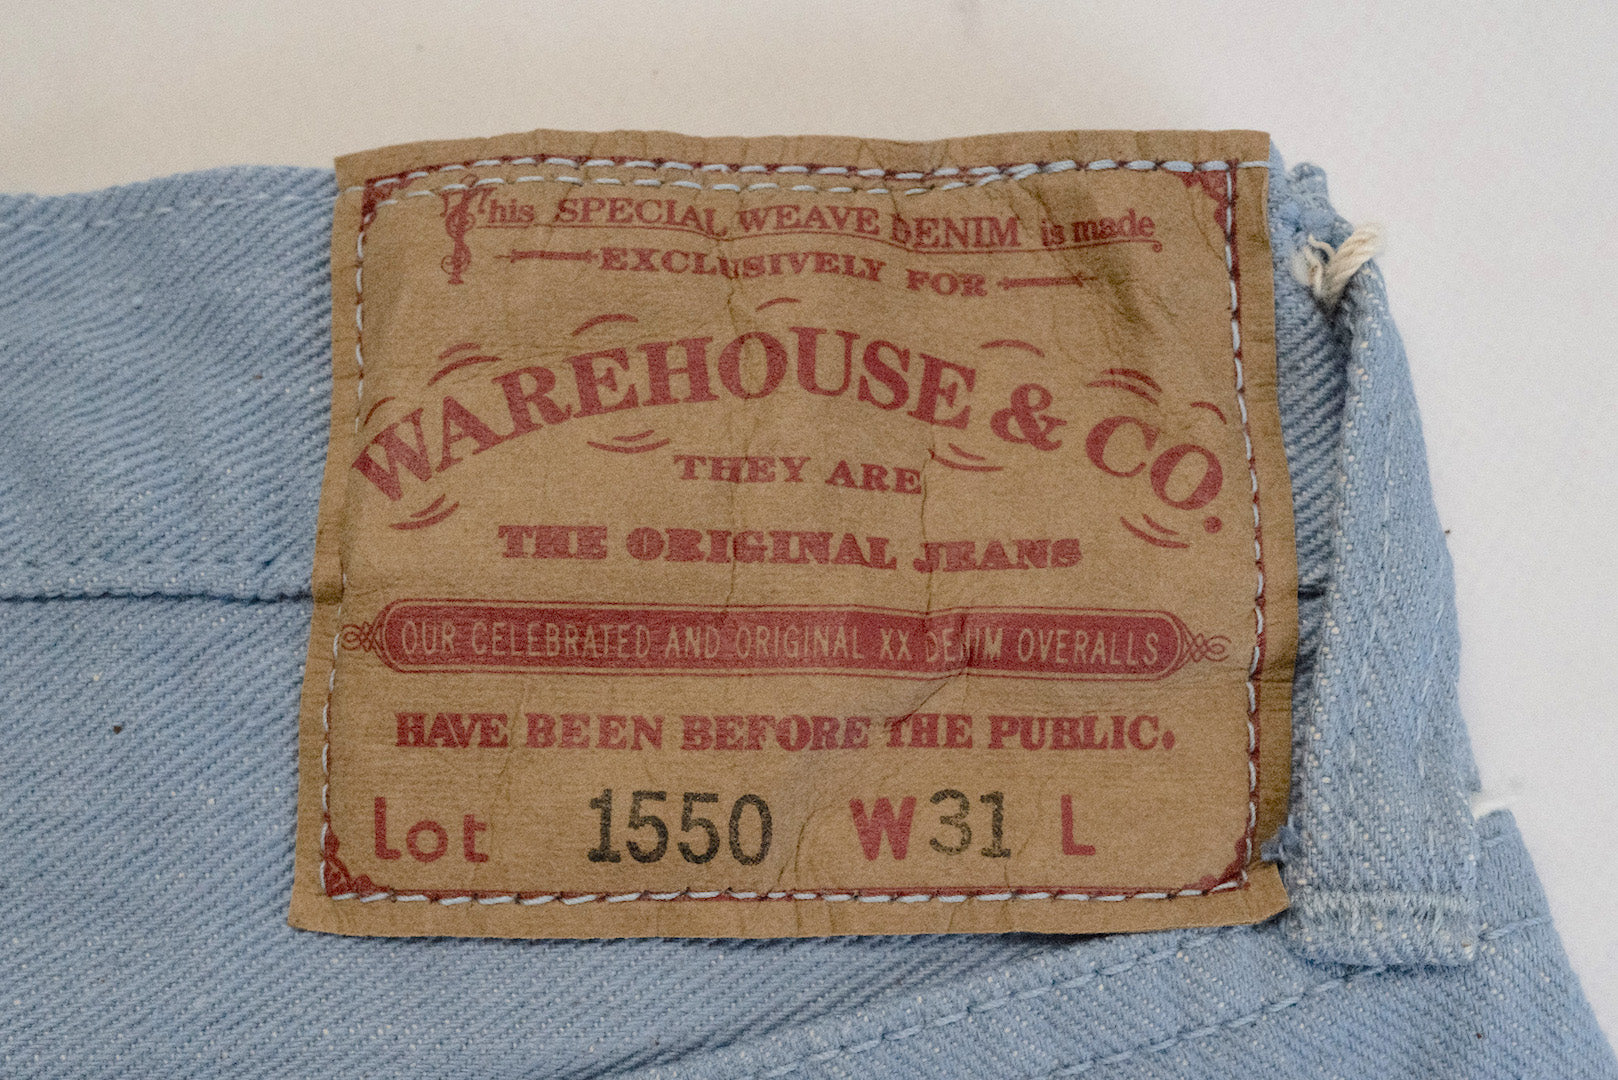 Warehouse 13.5oz Sax Blue Denim Shorts (Slim fit)